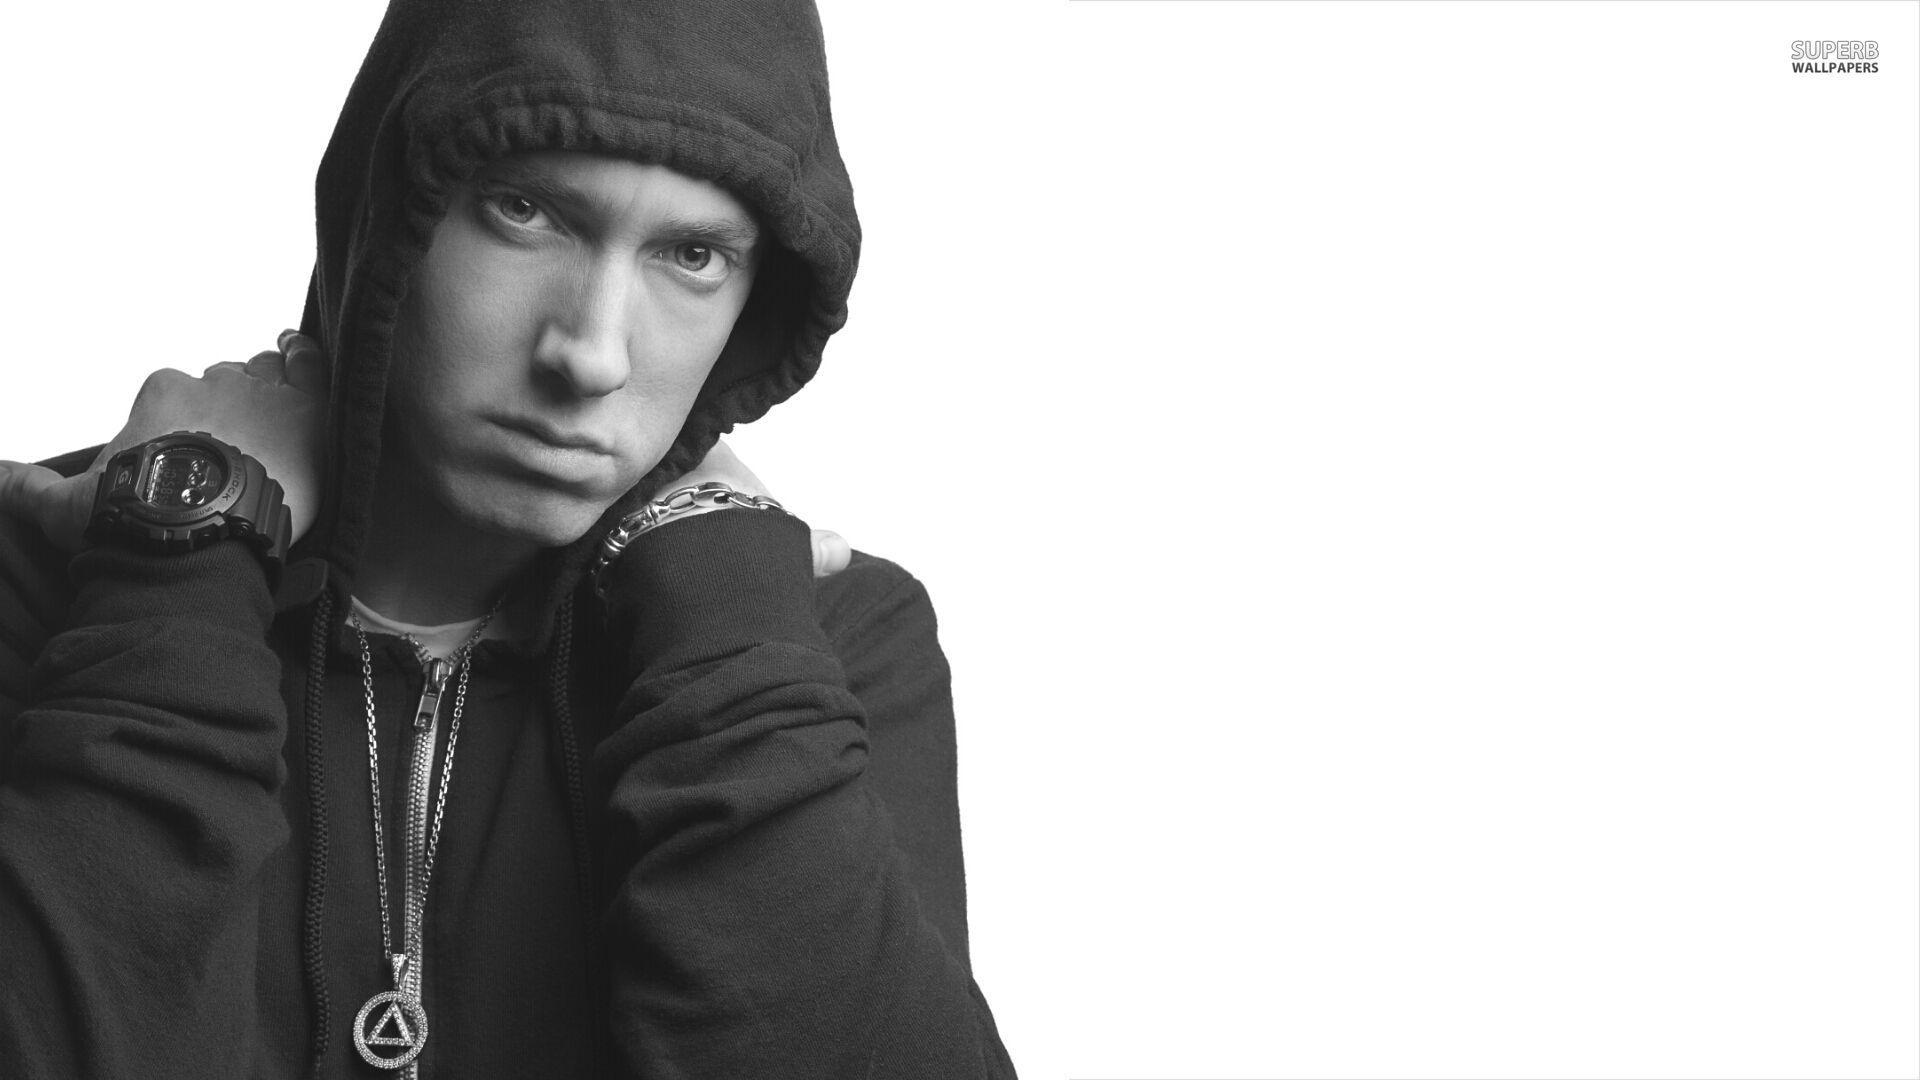 Eminem wallpaperx1080